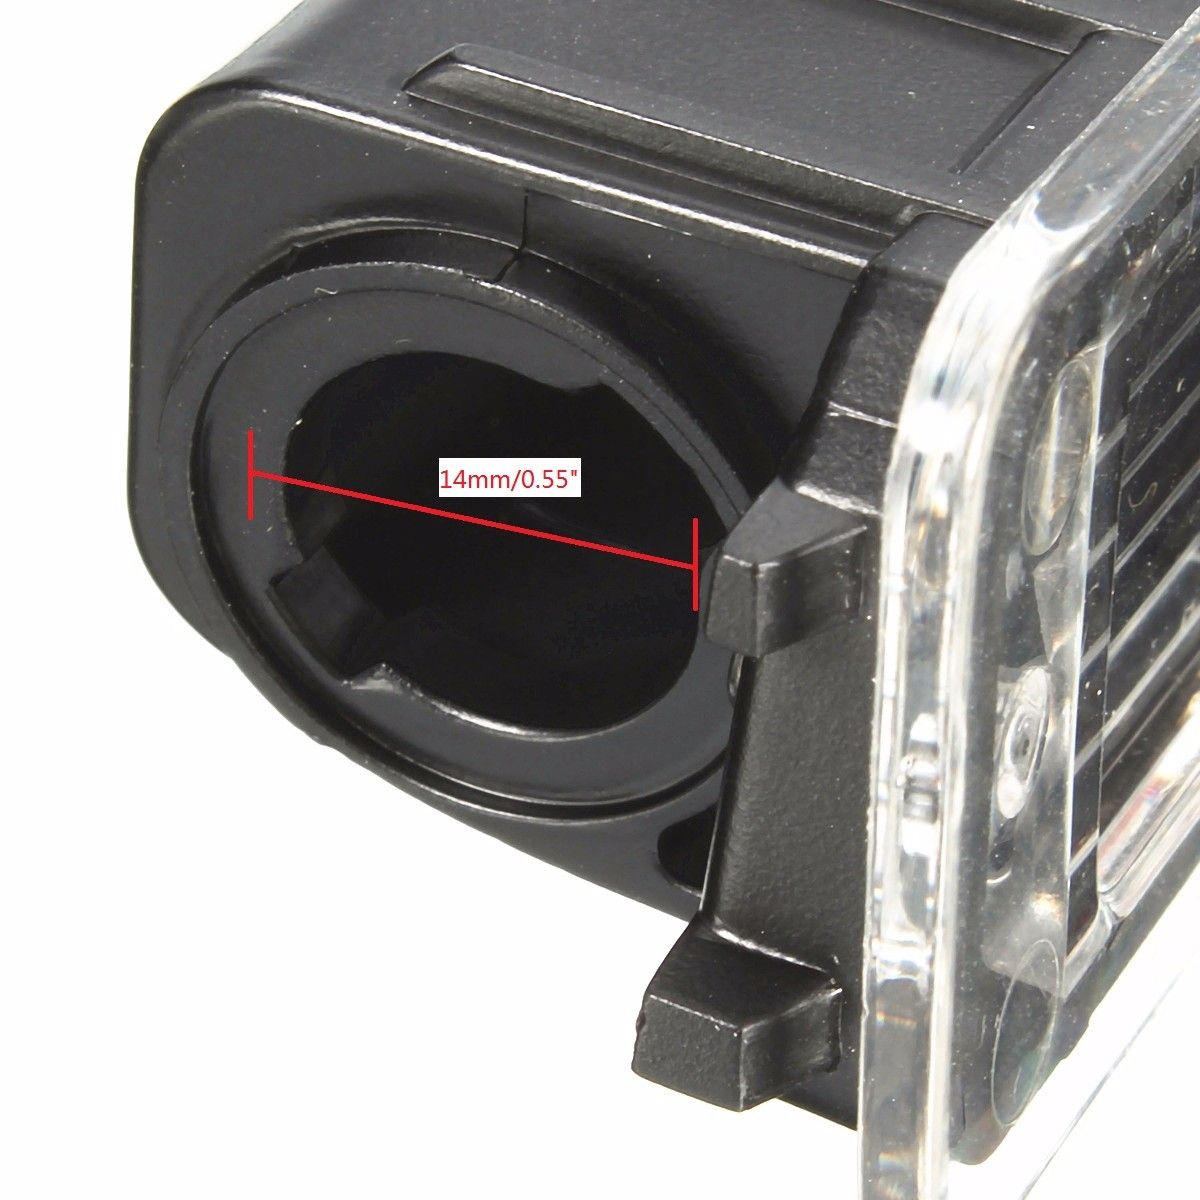 Reversing-Car-Rear-View-Camera-Kit-Waterproof-Night-Vision-For-VW-Golf-MK6-MK7-GTI-MK6-1371315